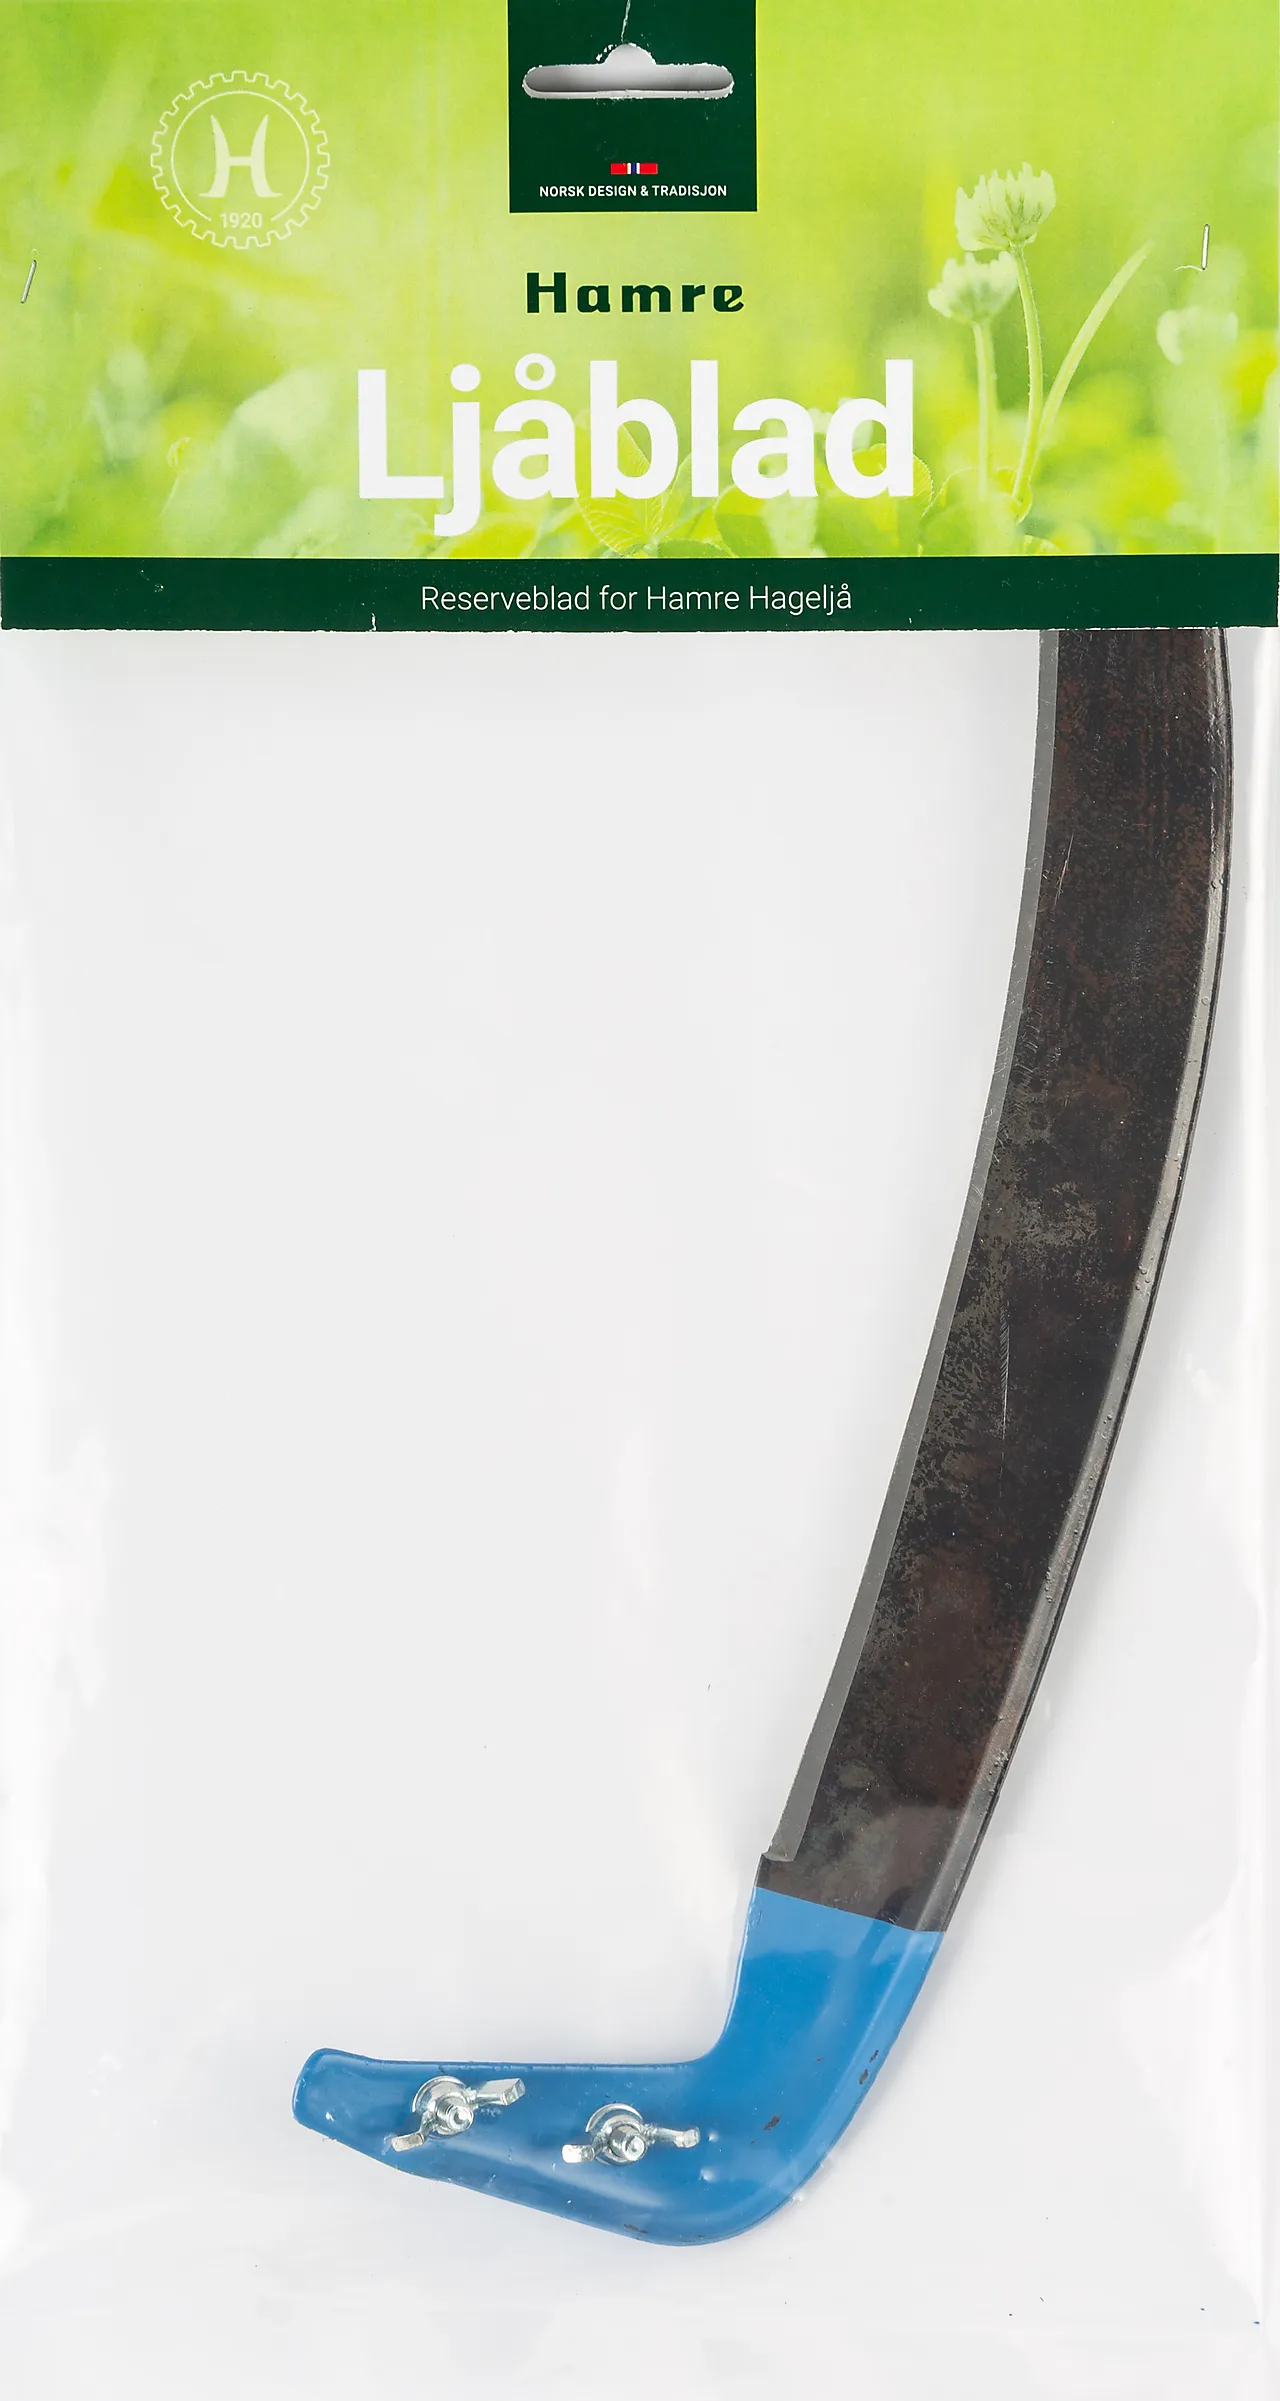 Reserveblad for hageljå hamreljåblad lev m/skrue for mont null - null - 1